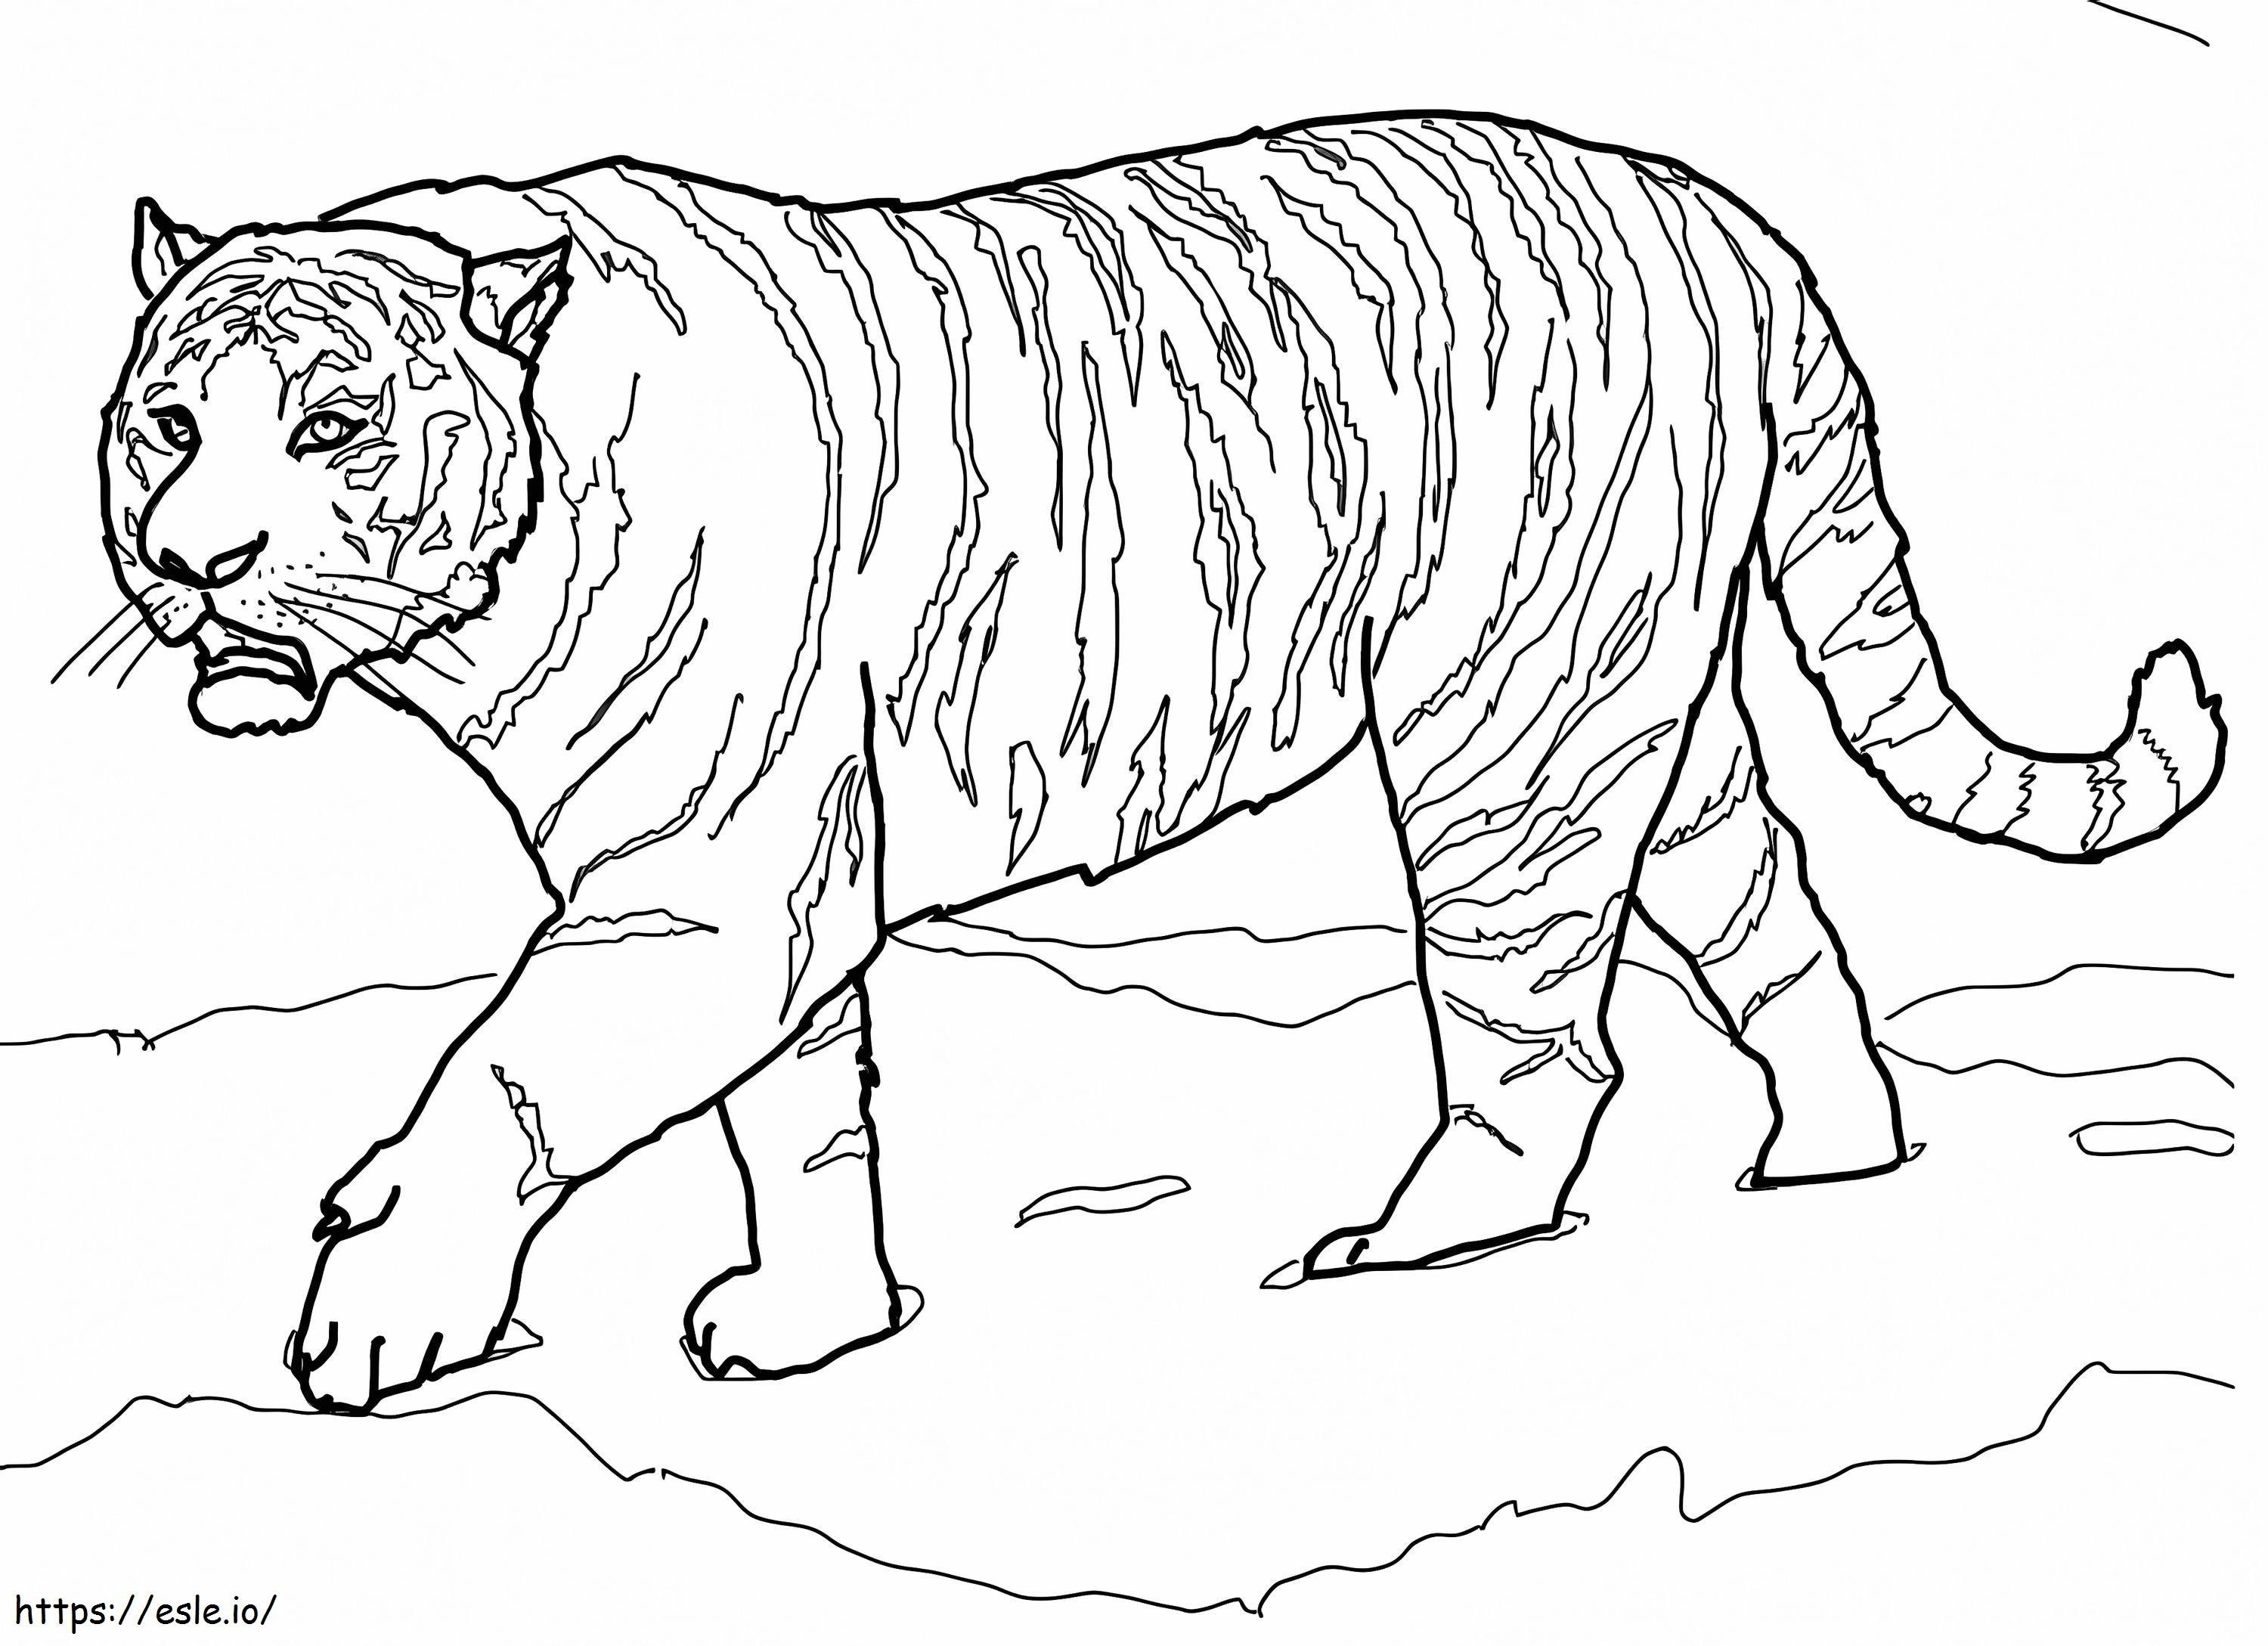 Tigre de Amur para colorear